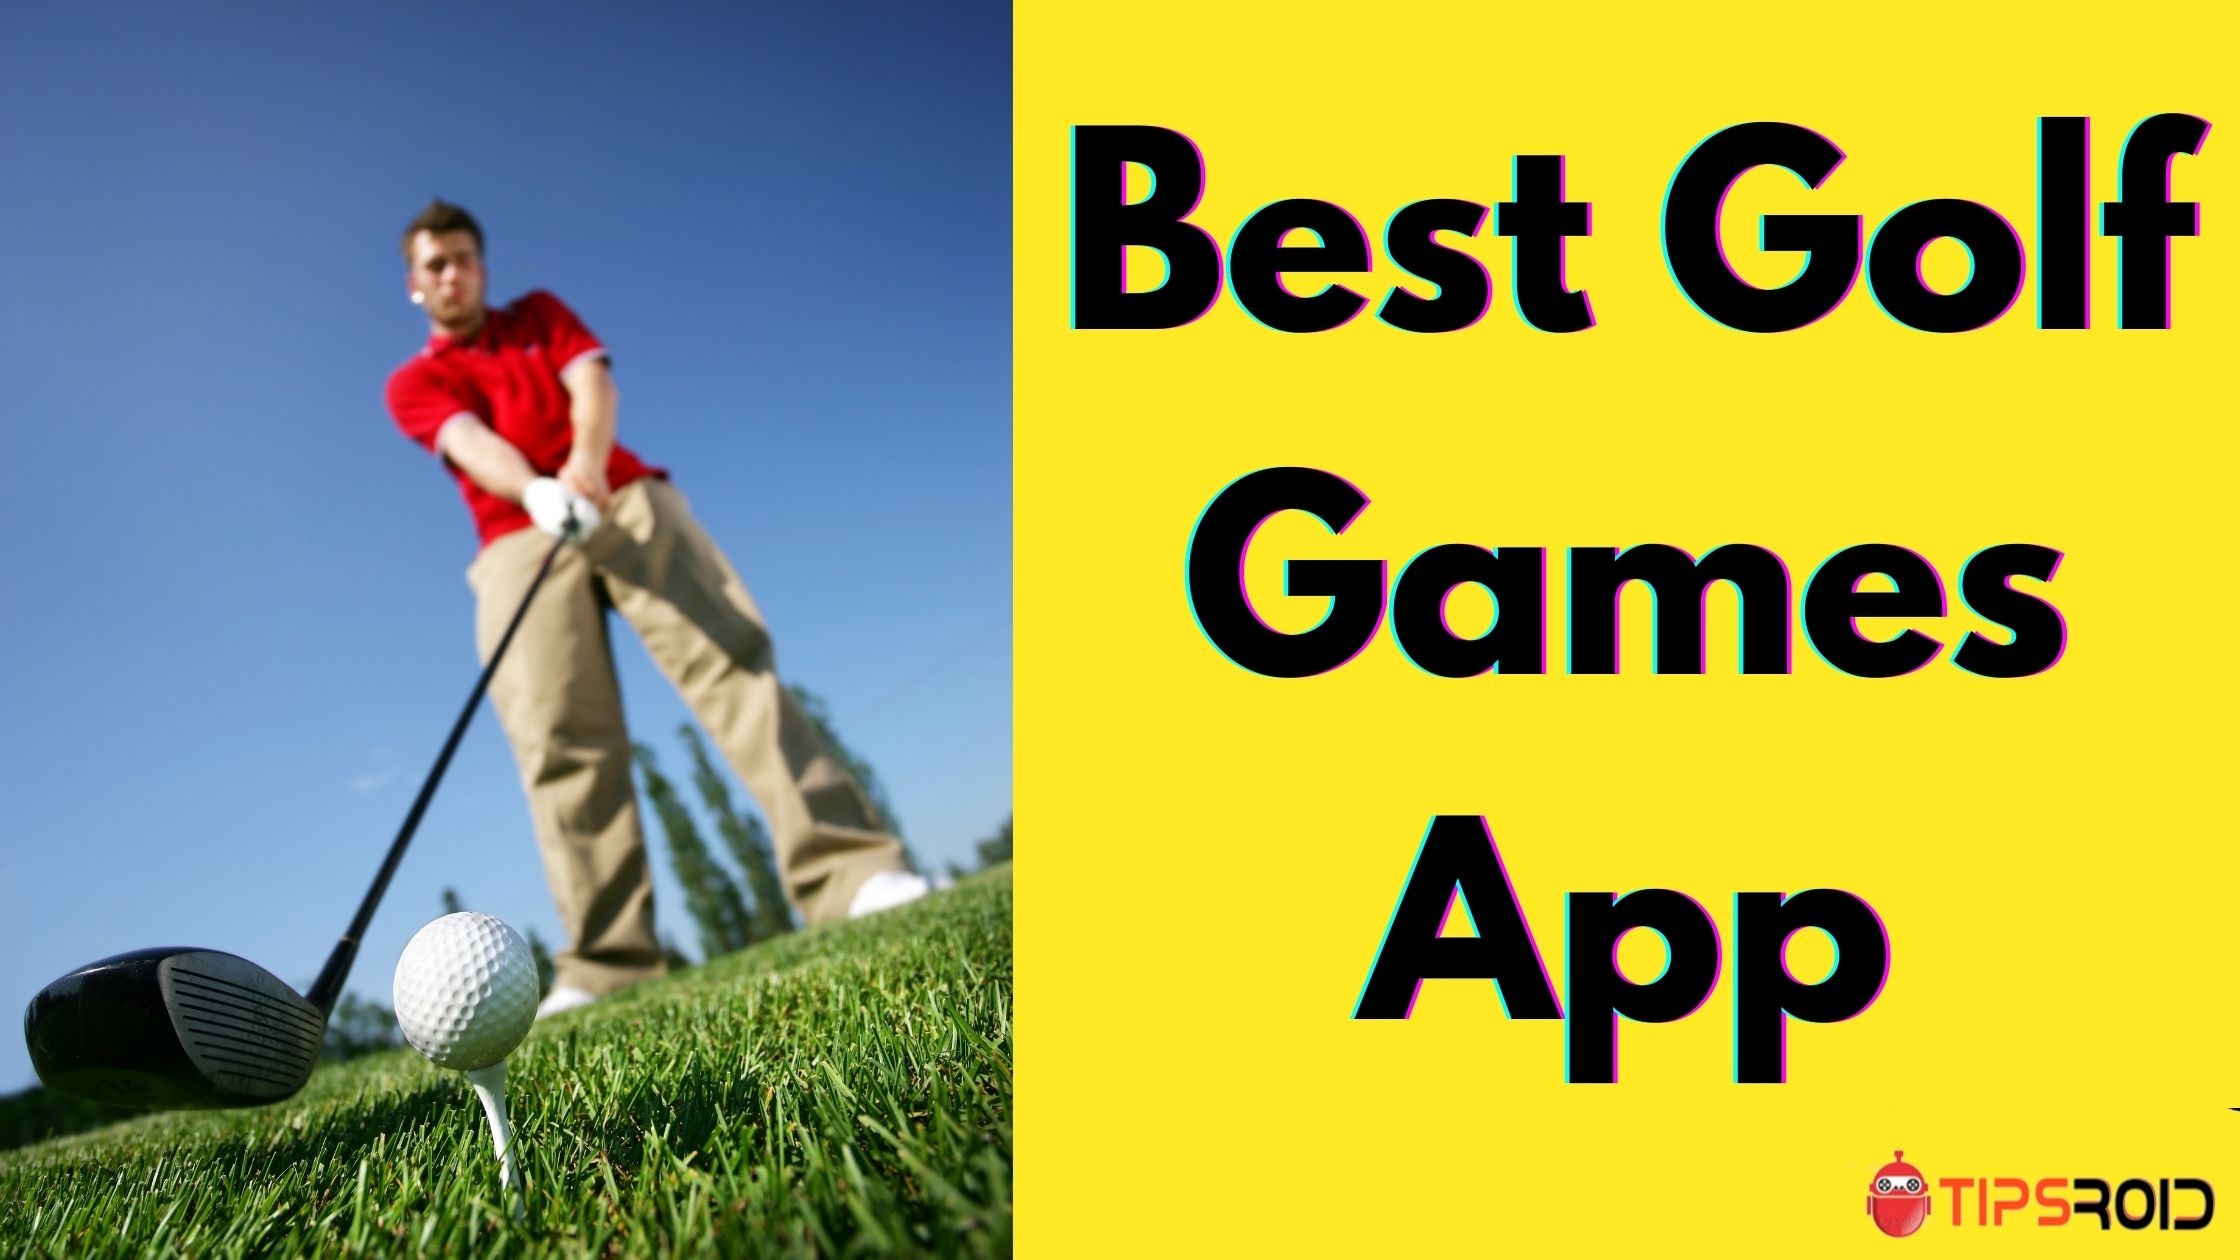 Golf Games App